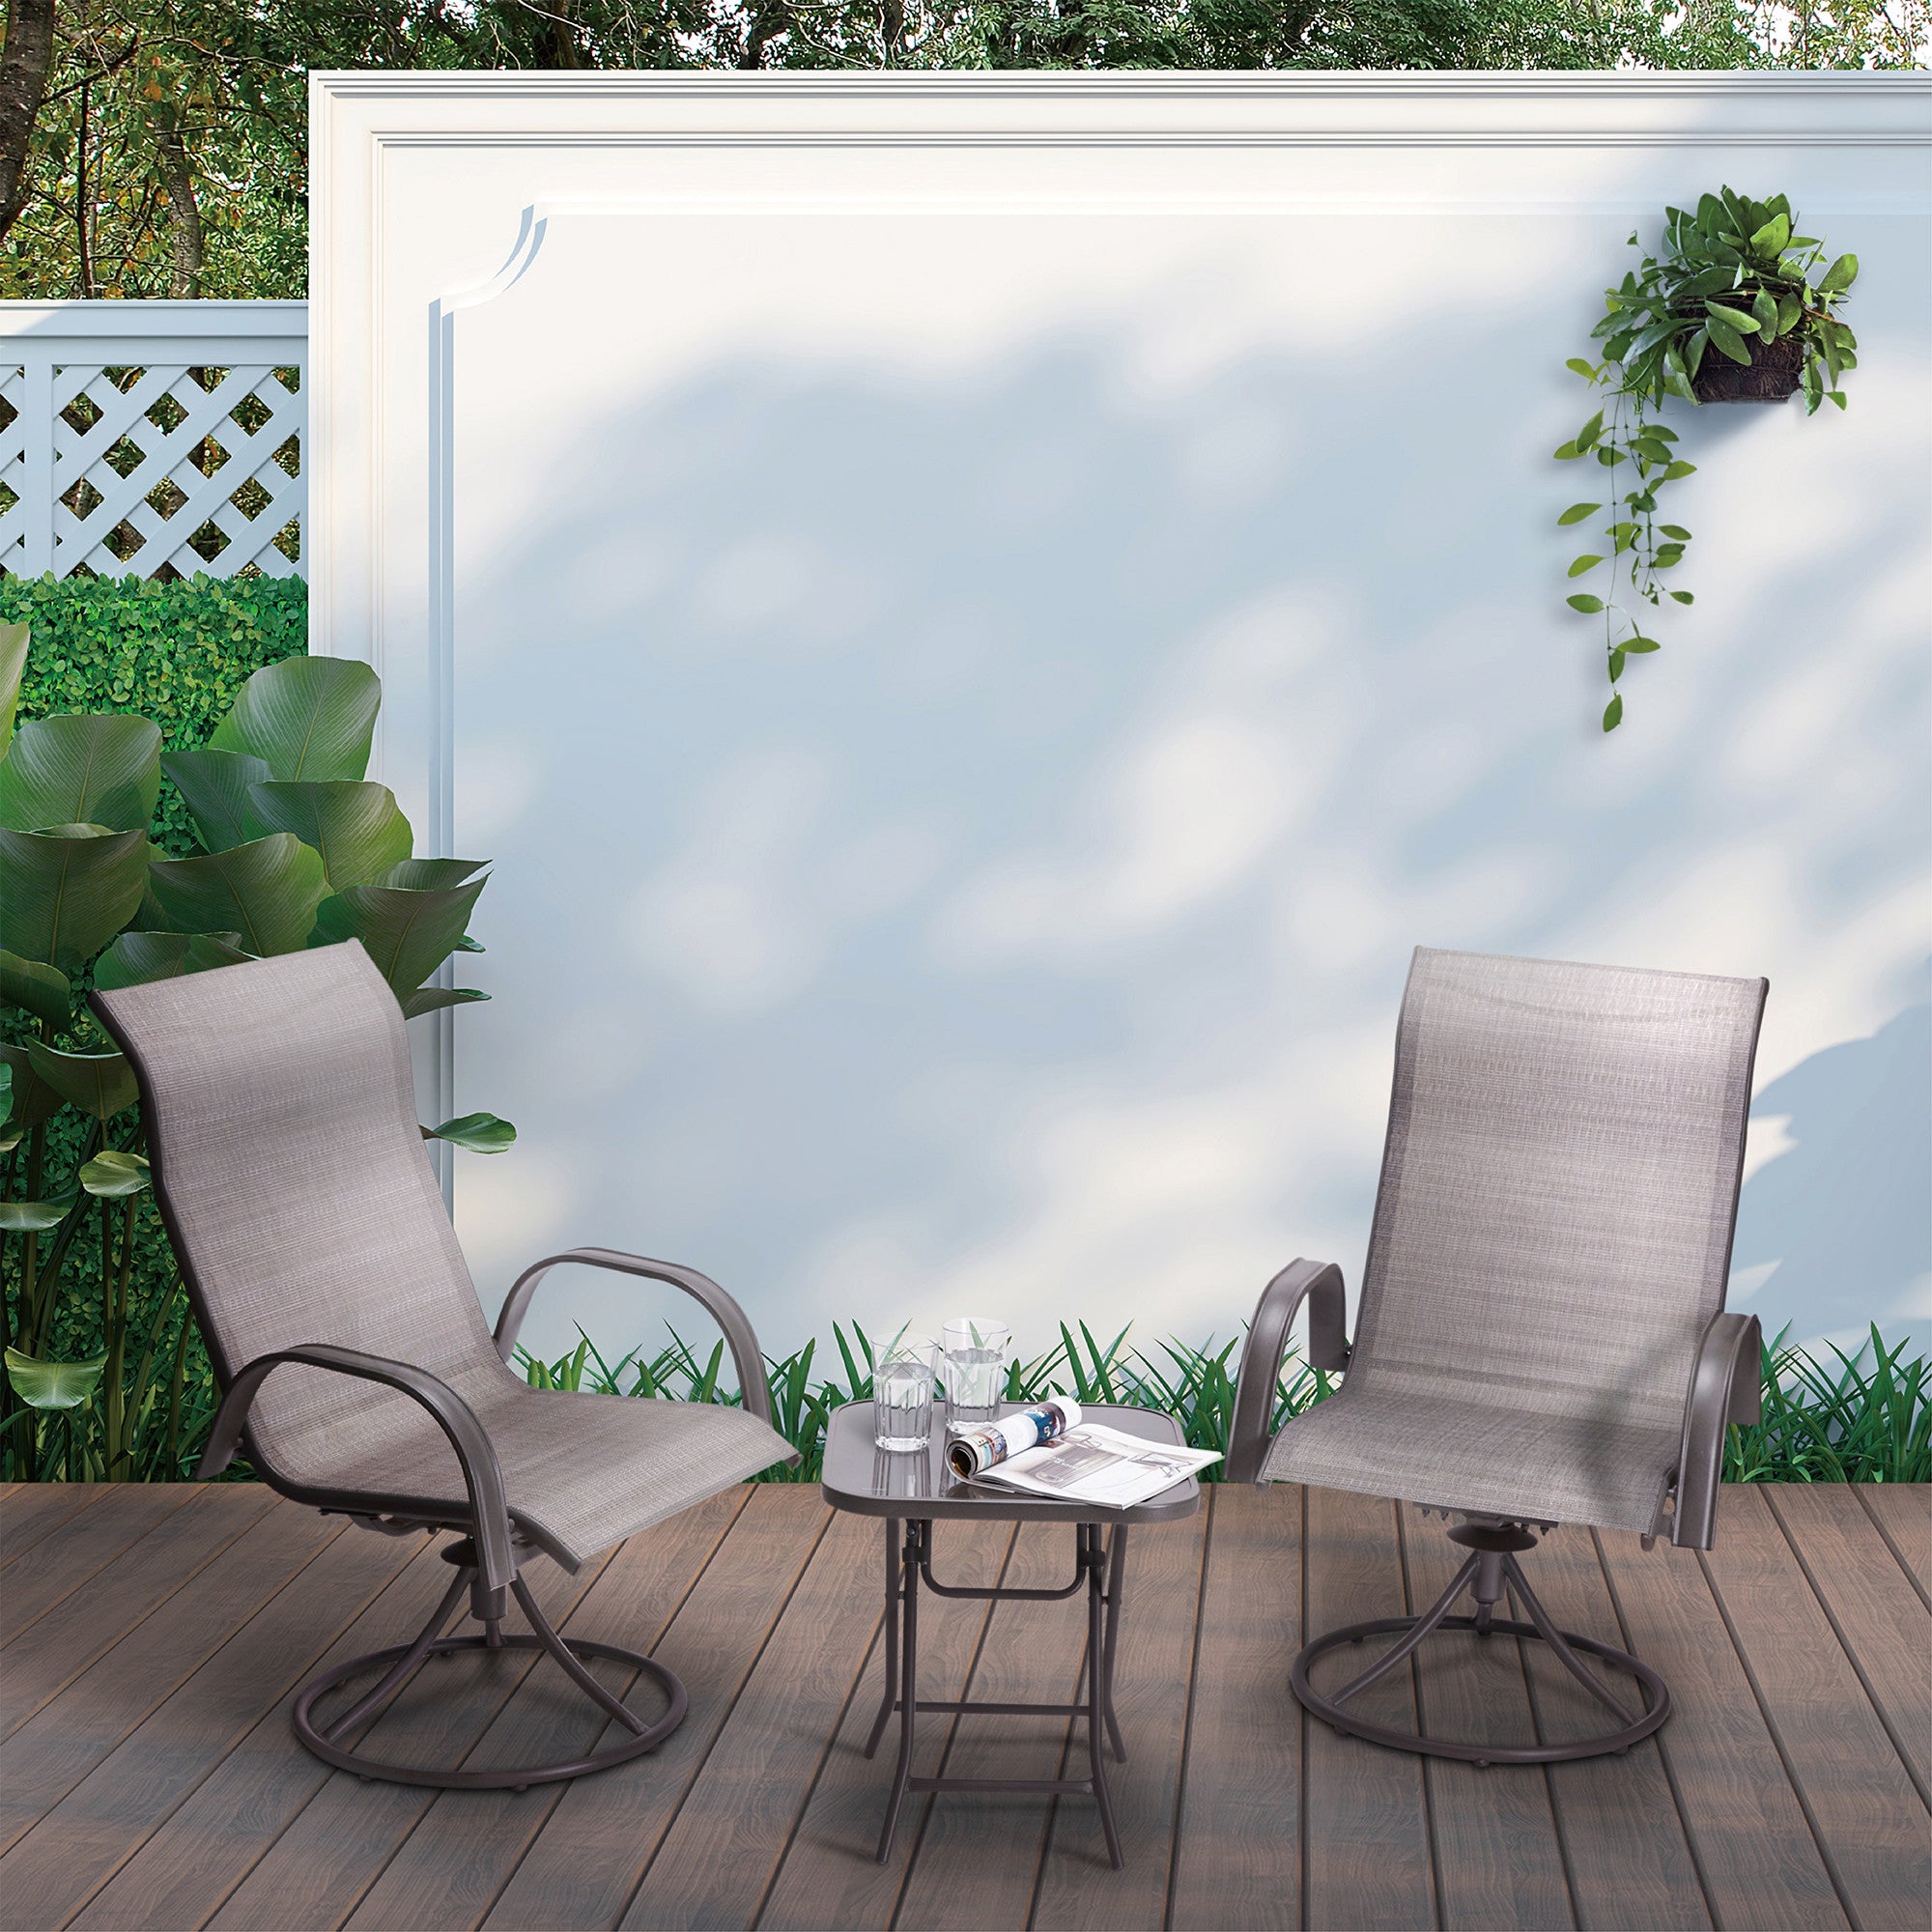 Teamson Home Indoor/Outdoor Steel Swivel 3 Piece Bistro Table and Chairs Set, Tan